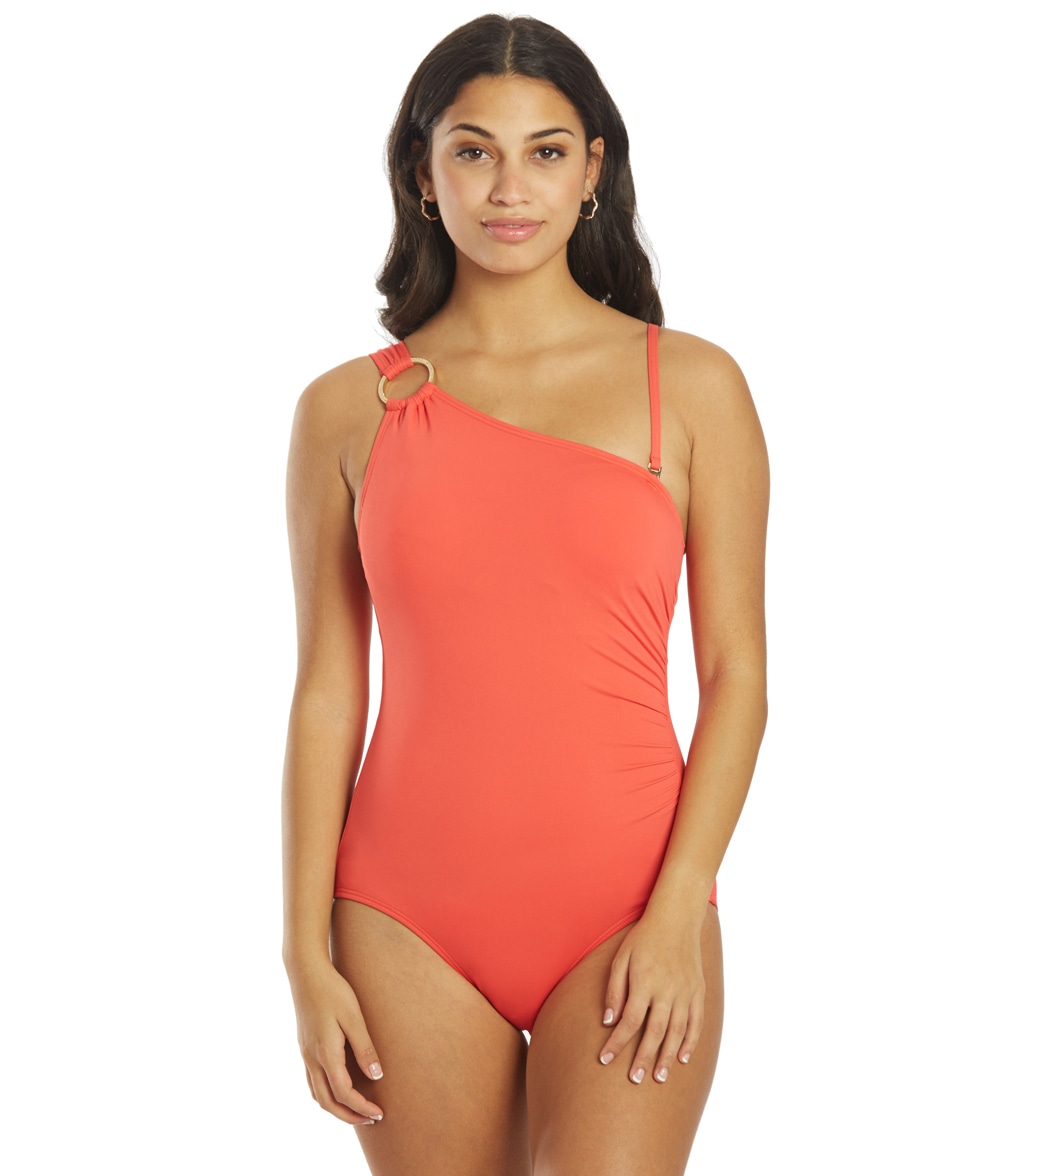 Michael Kors Women's Iconic Solid Underwire One Shoulder Piece Swimsuit - Sangria